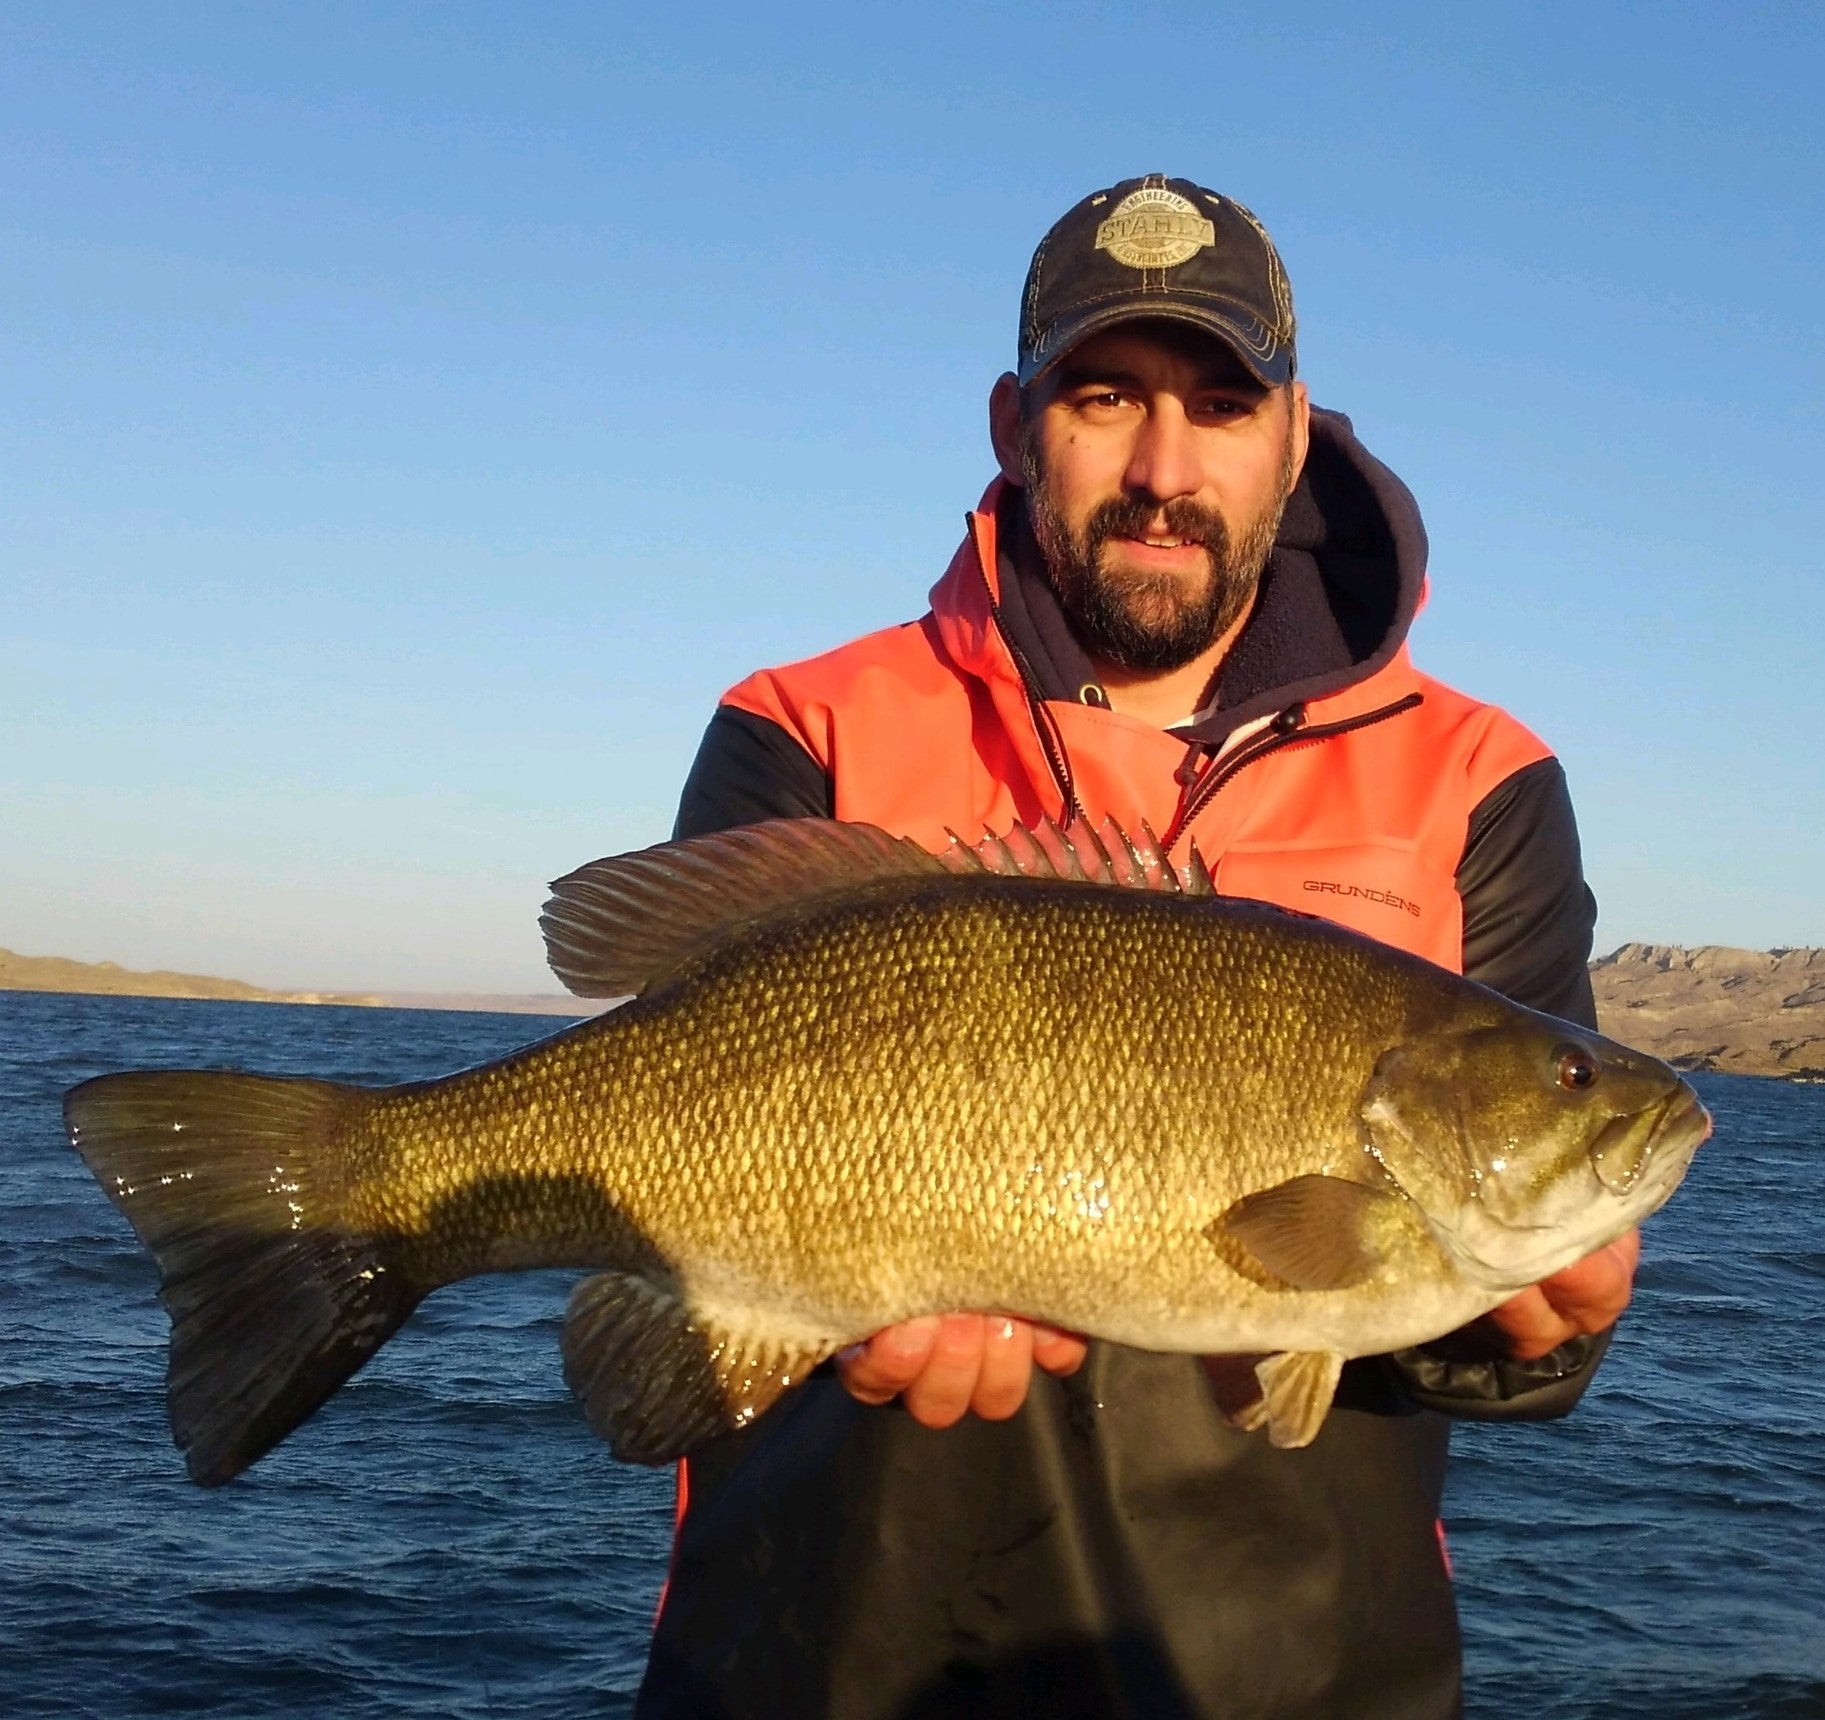 Fisherman Catches New Record Smallmouth Bass | Field & Stream